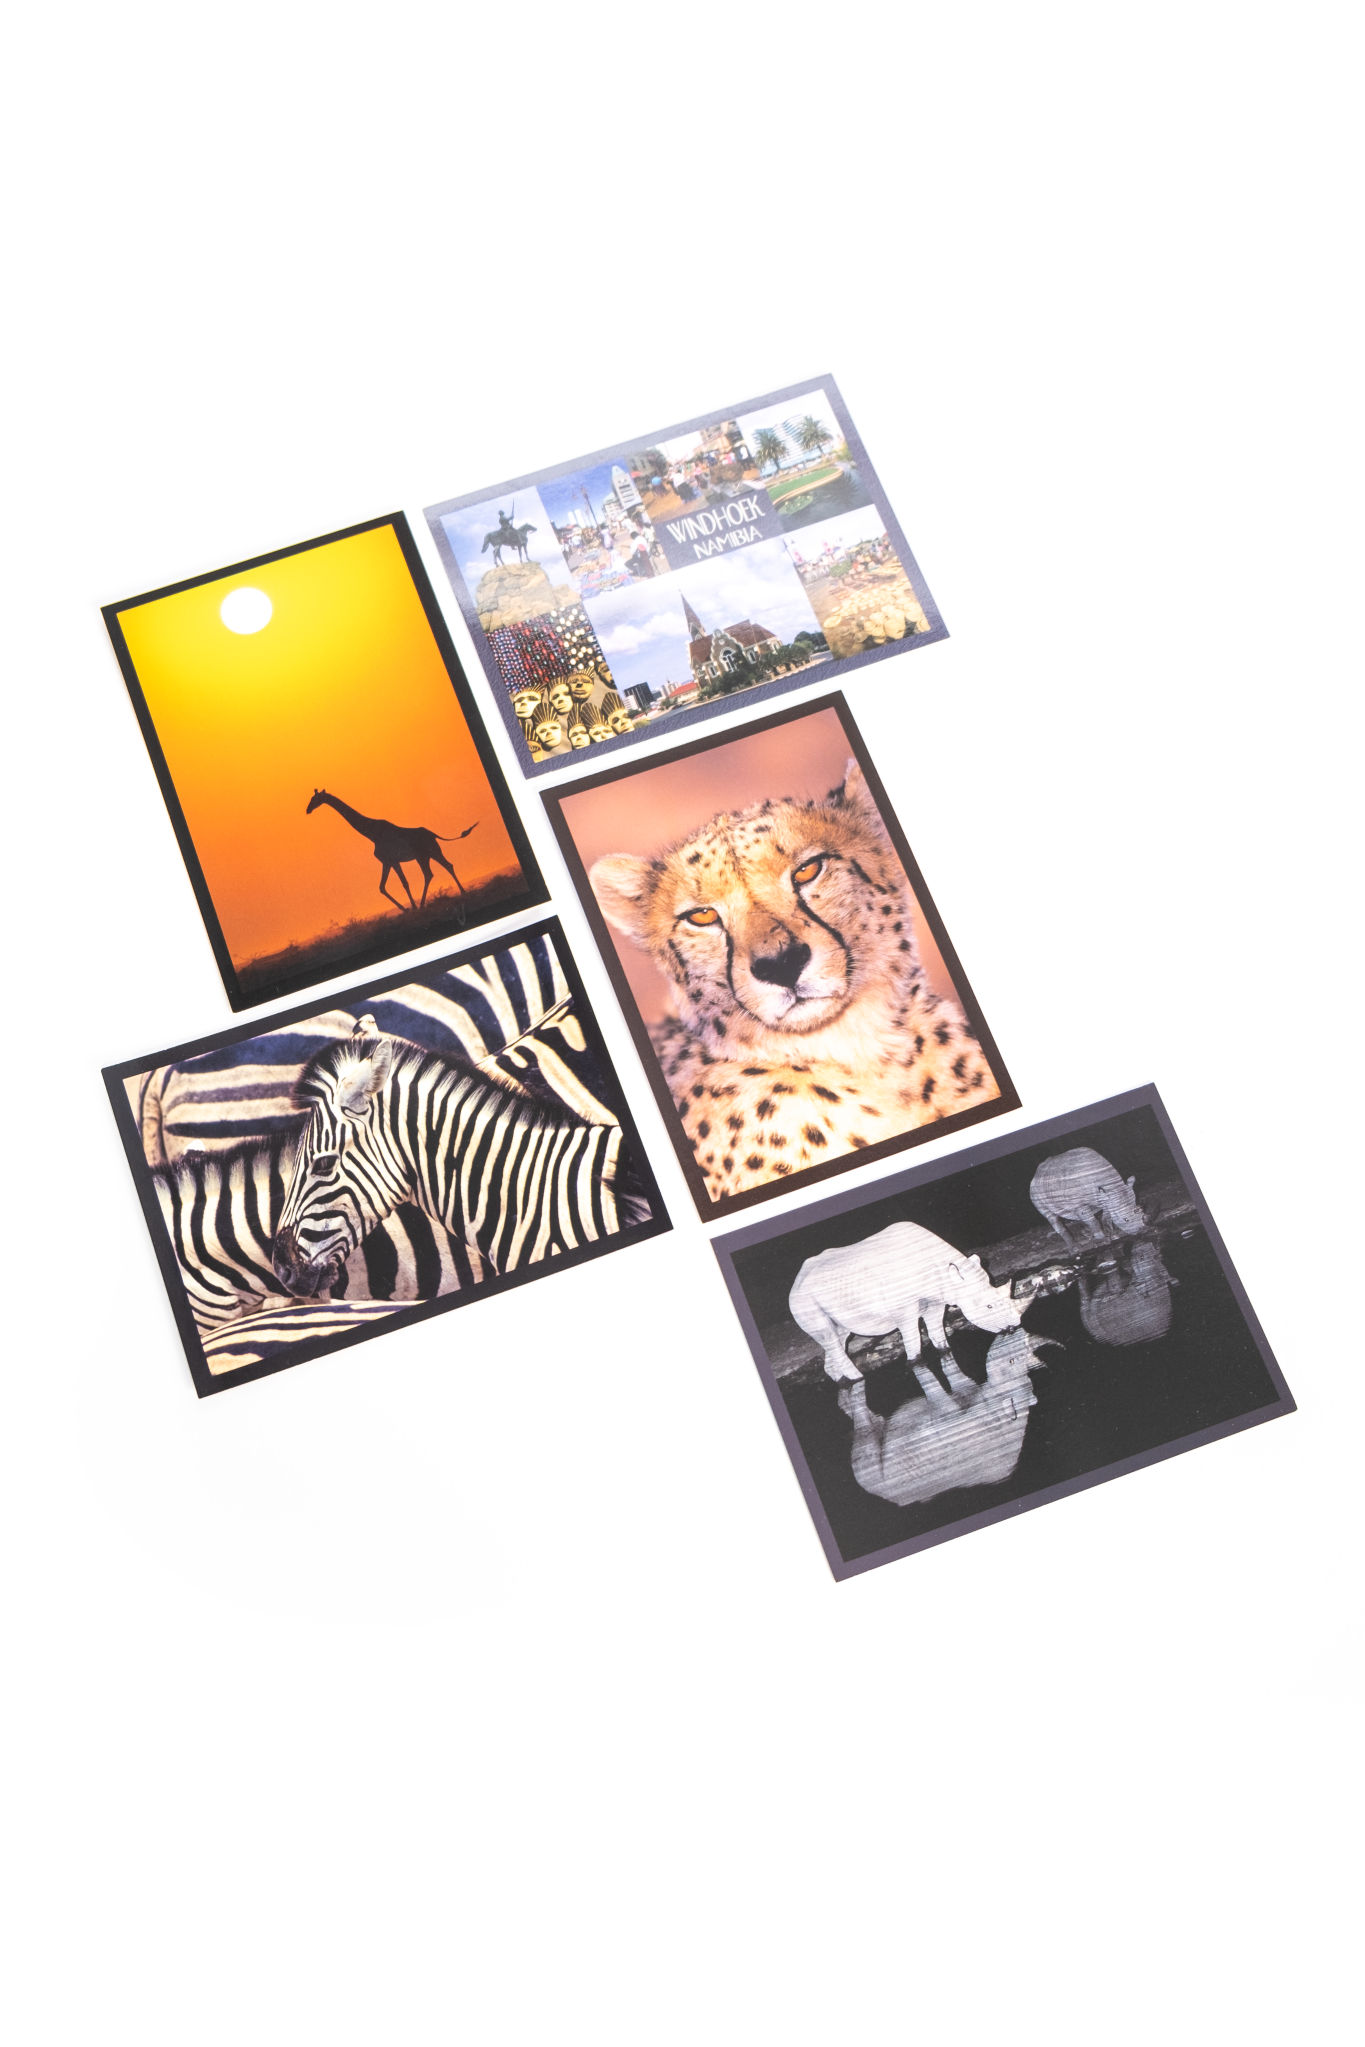 Namibian Postcards